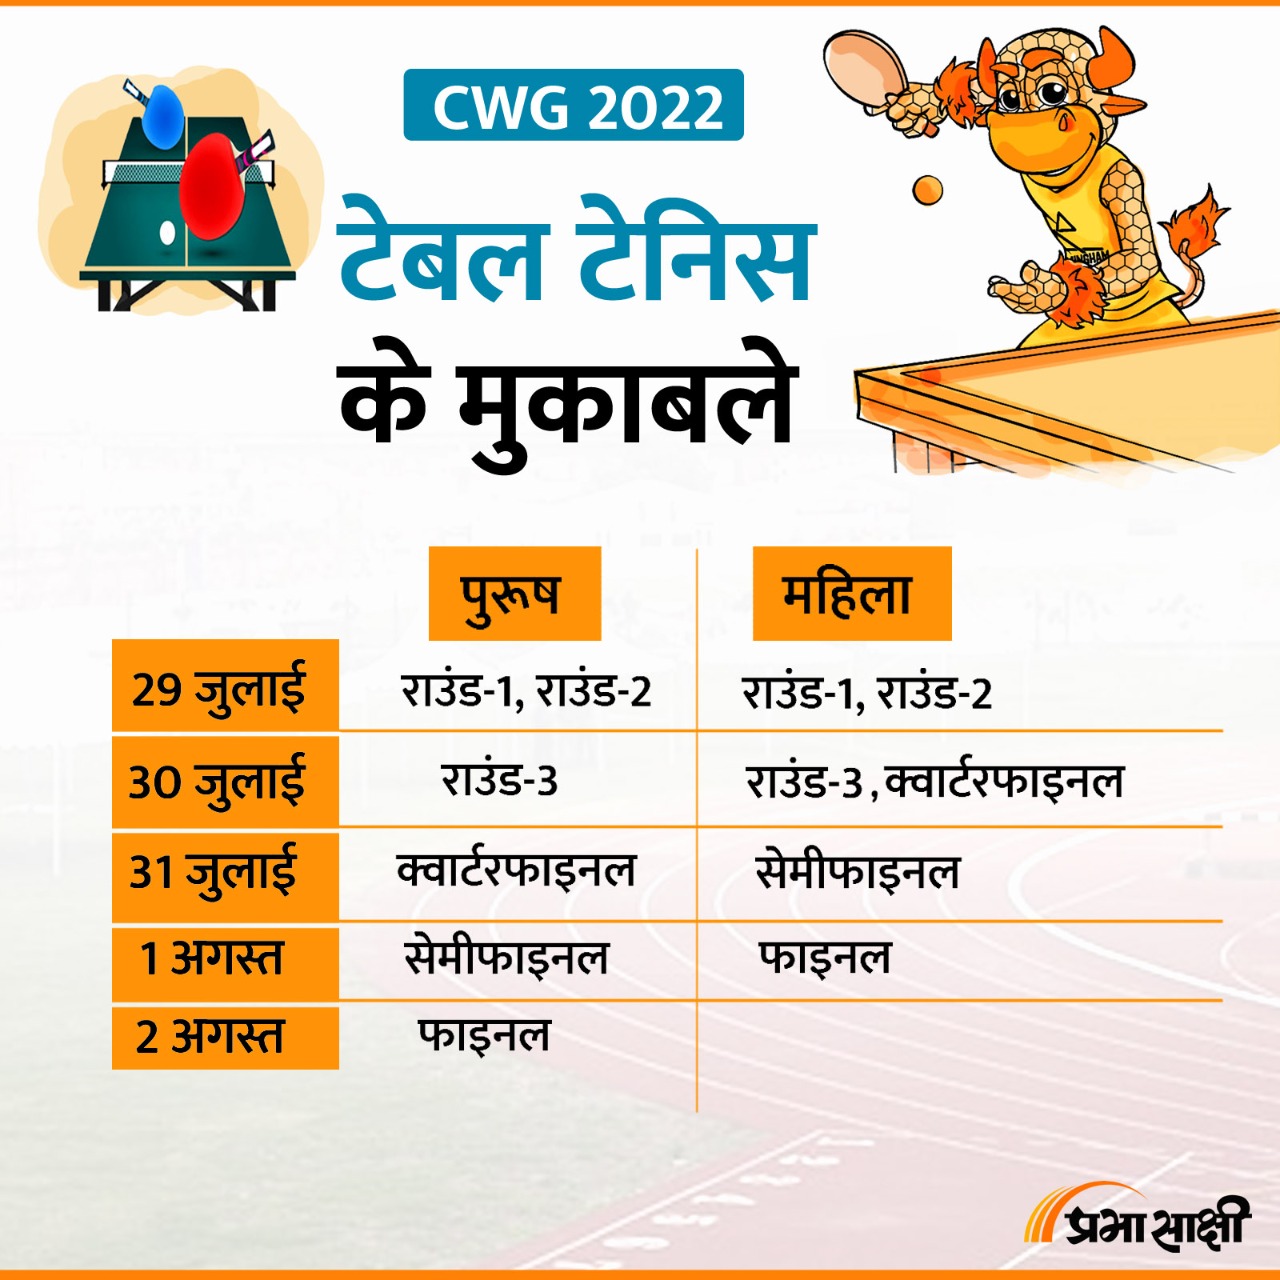 CWG 2022 Table Tennis